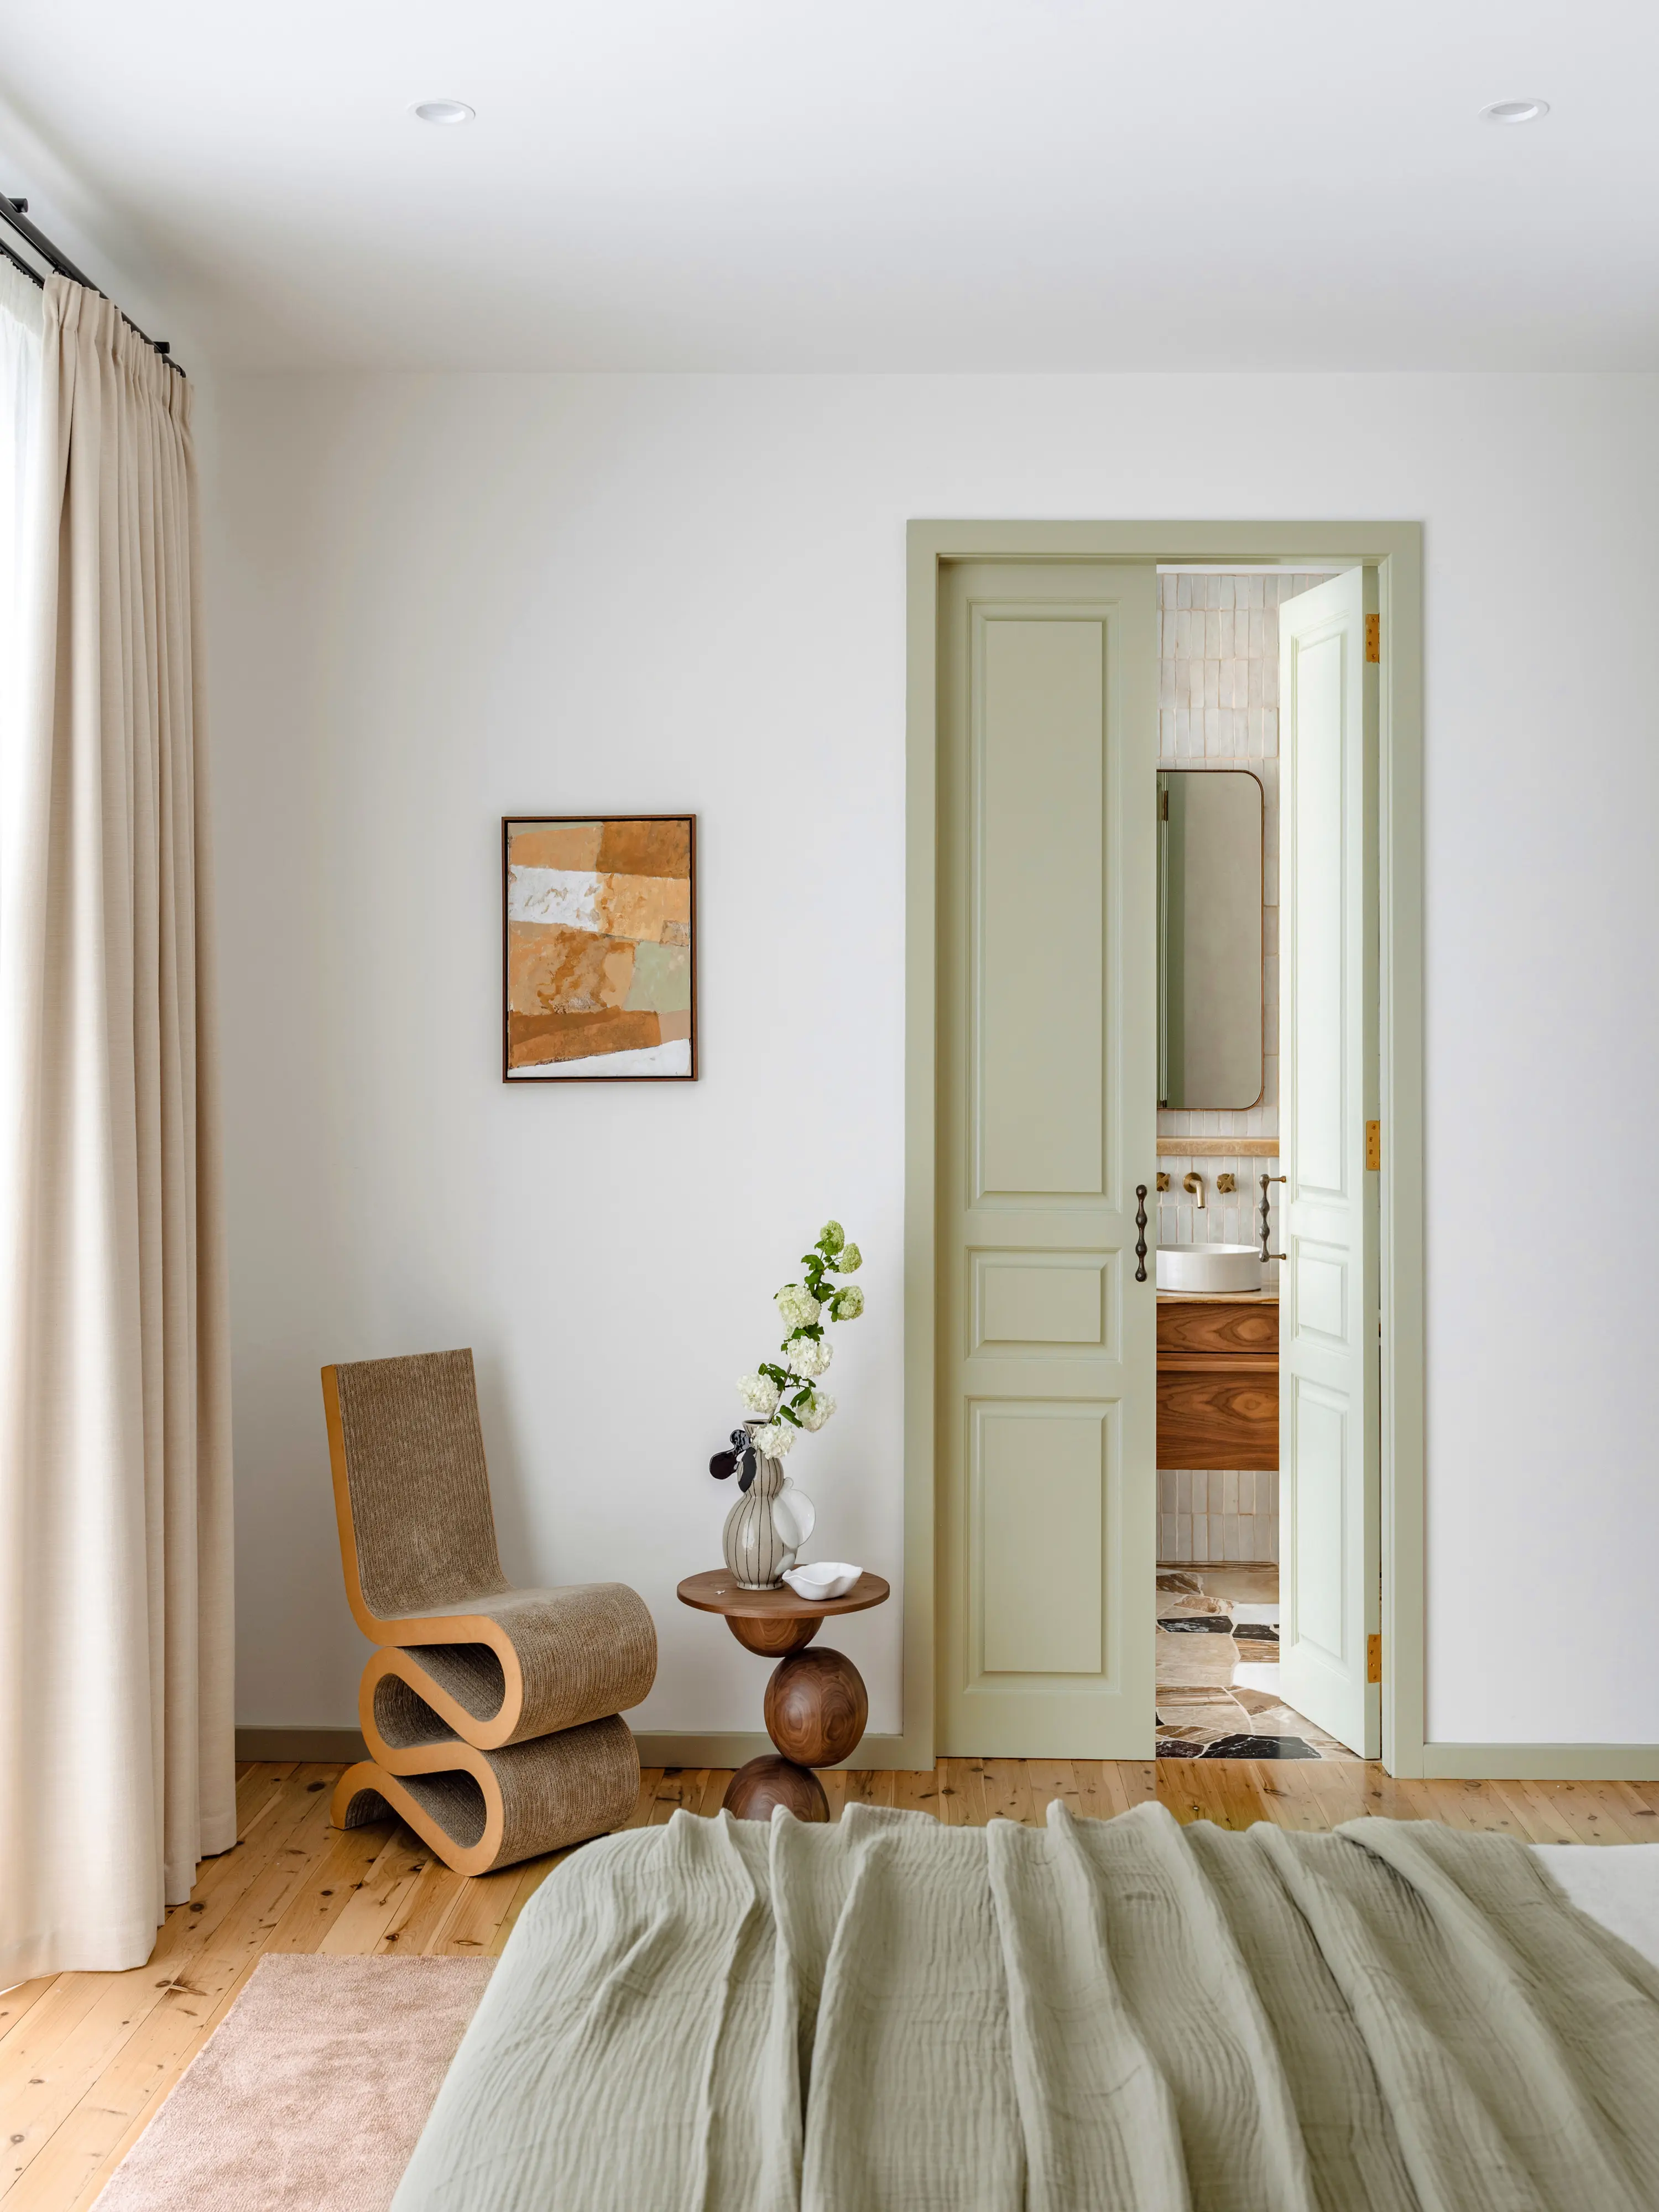 White bedroom with green door after image